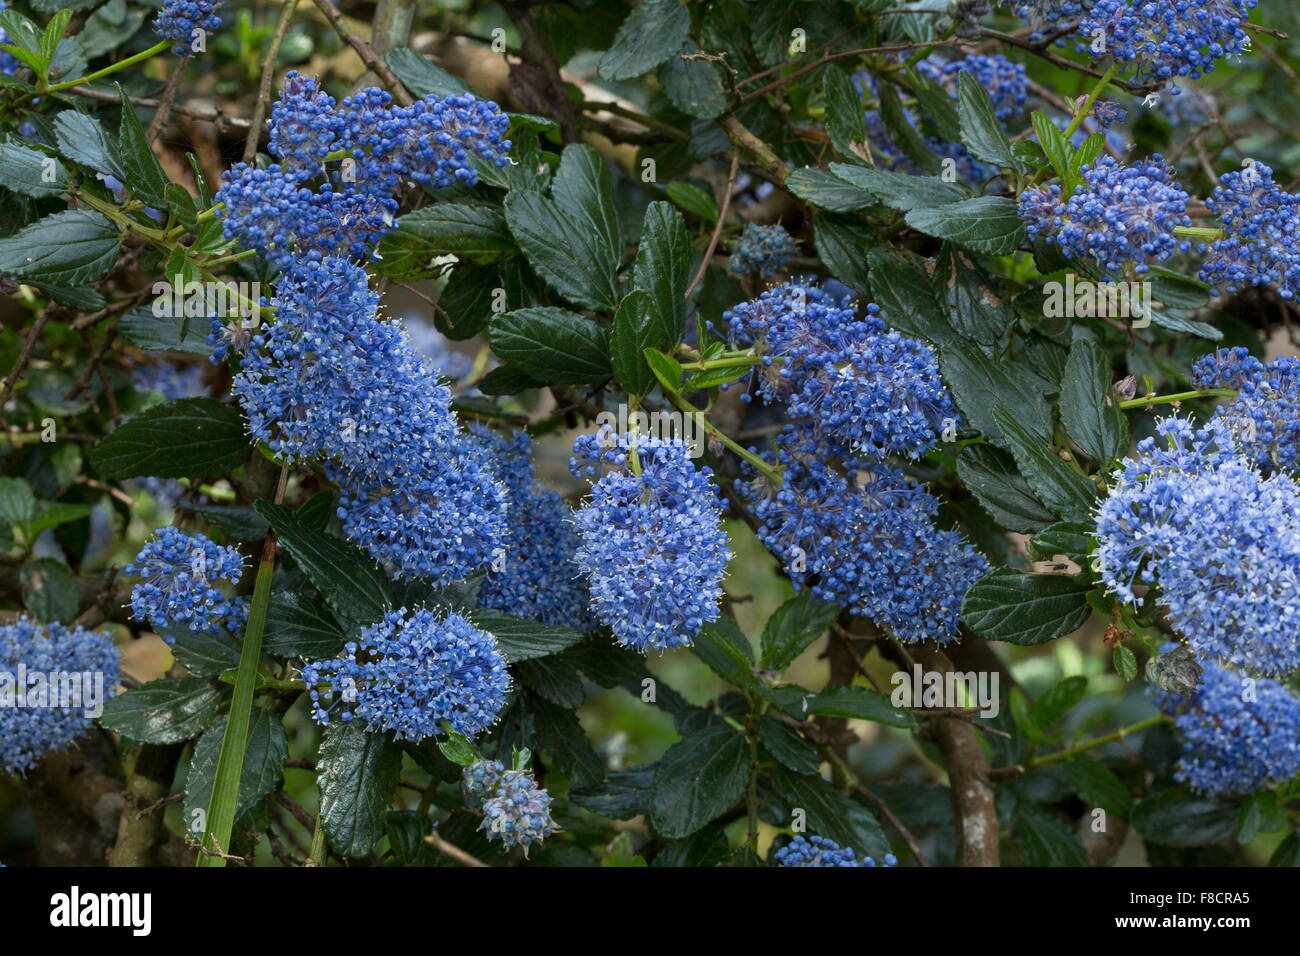 Creeping blue blossom, Ceanothus thyrsiflorus var repens in flower. From North California. Stock Photo